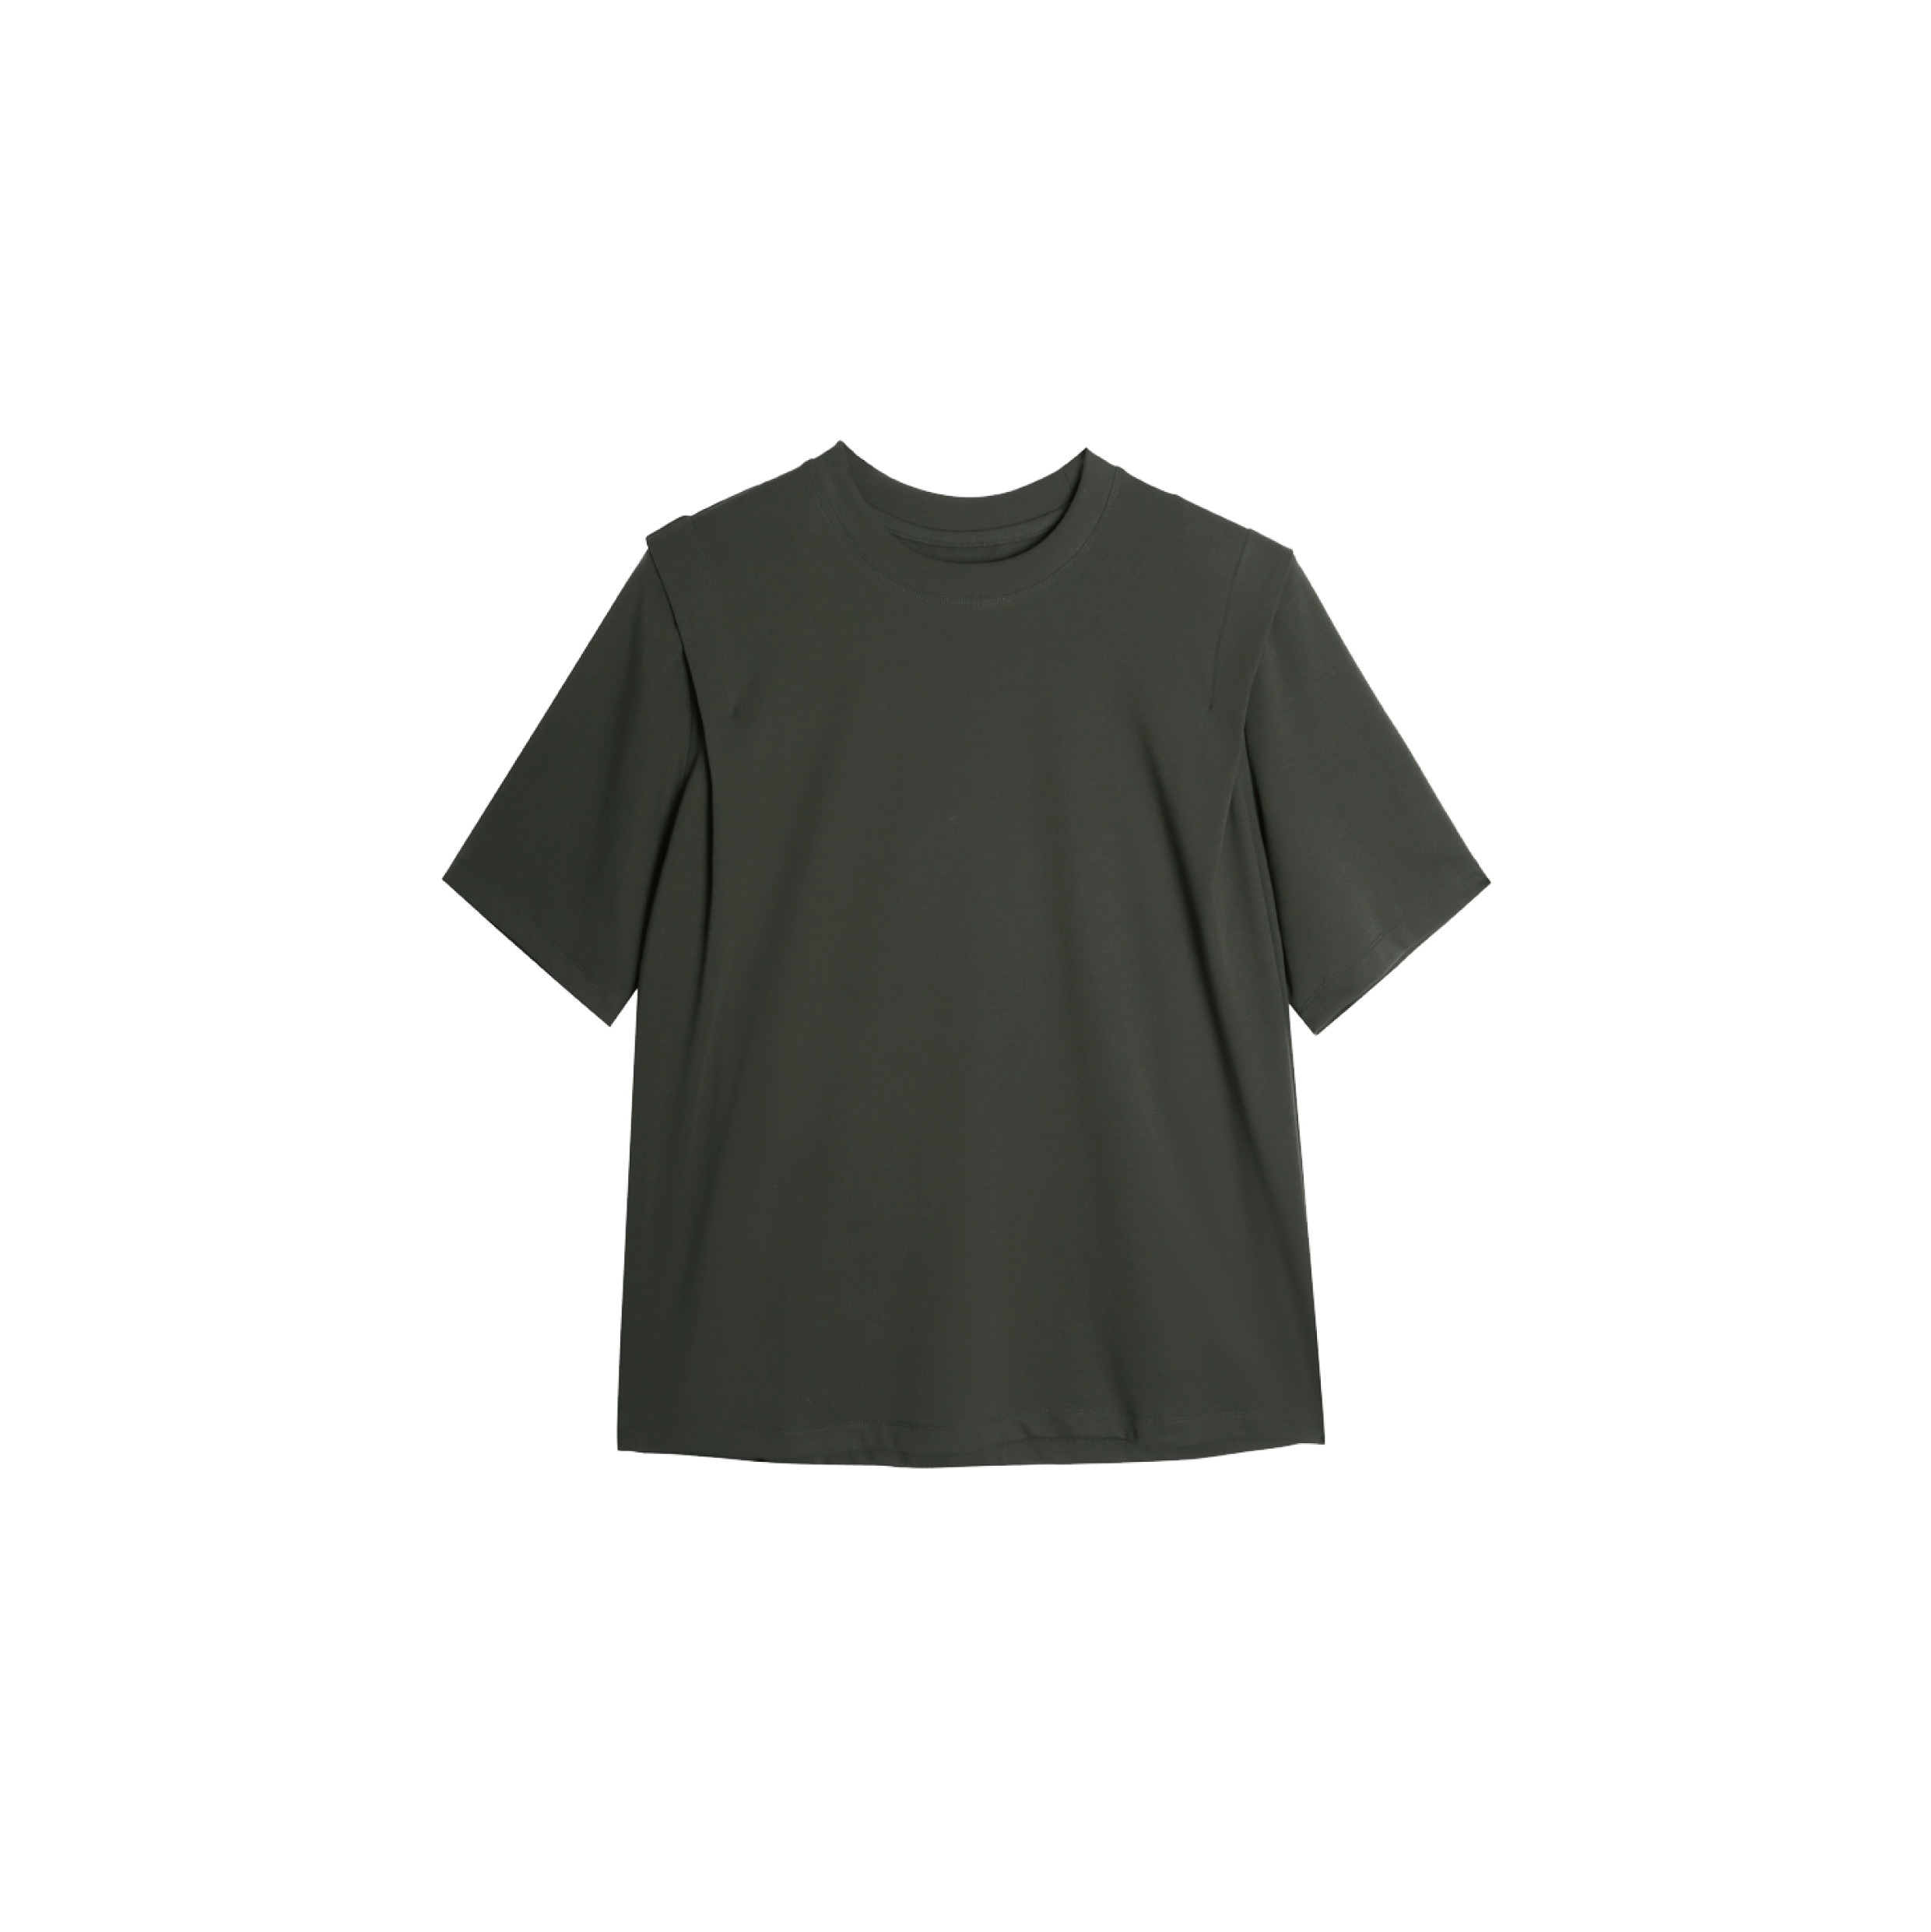 Shoulder Pad Design T-Shirt